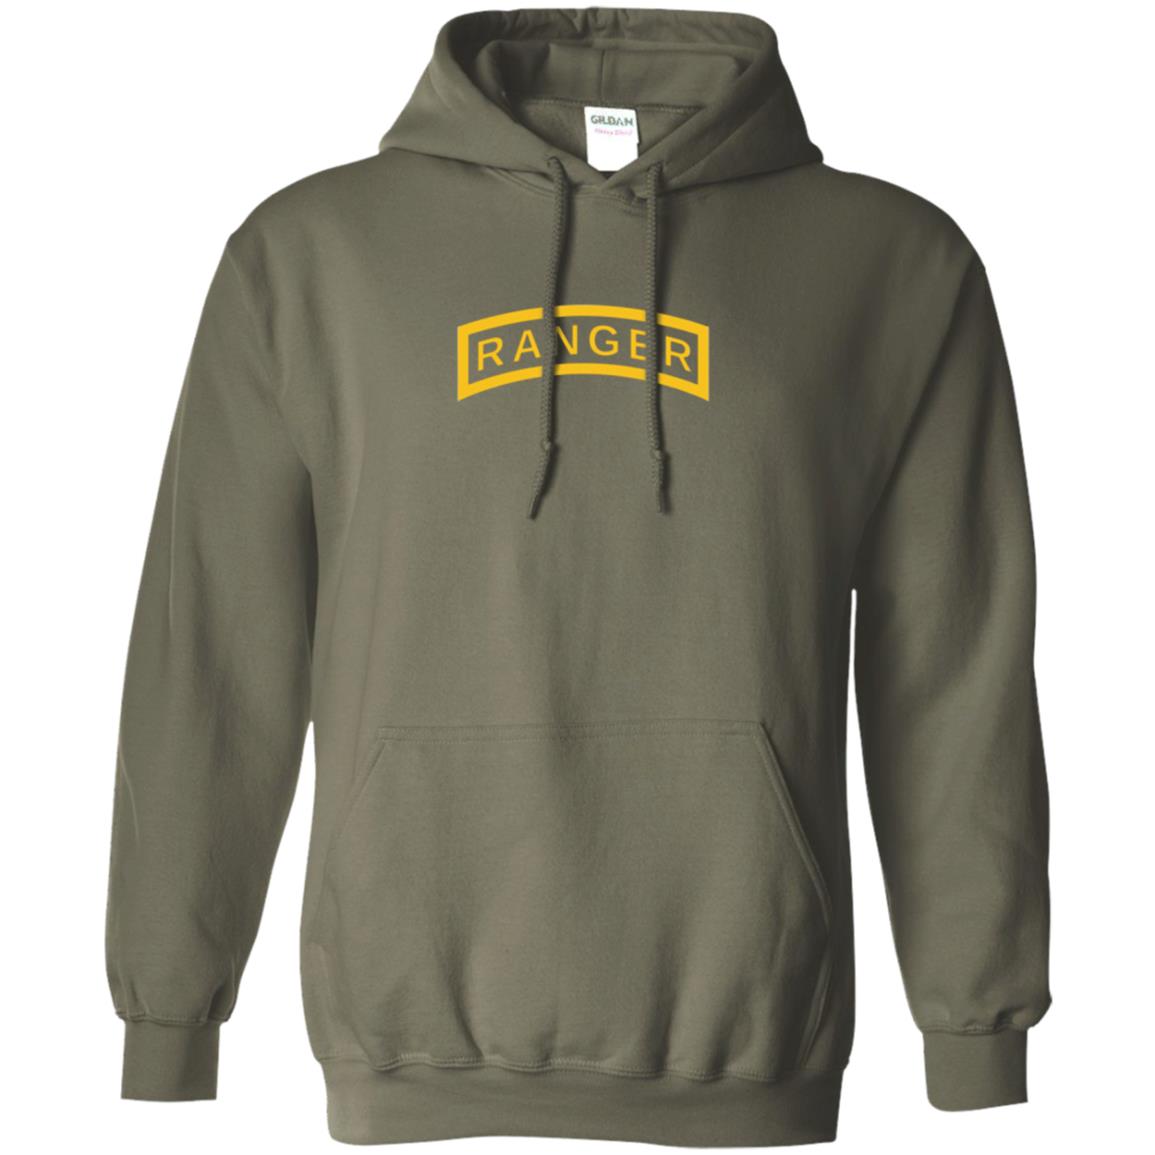 Army Ranger Sweatshirt - 10% Off - FavorMerch